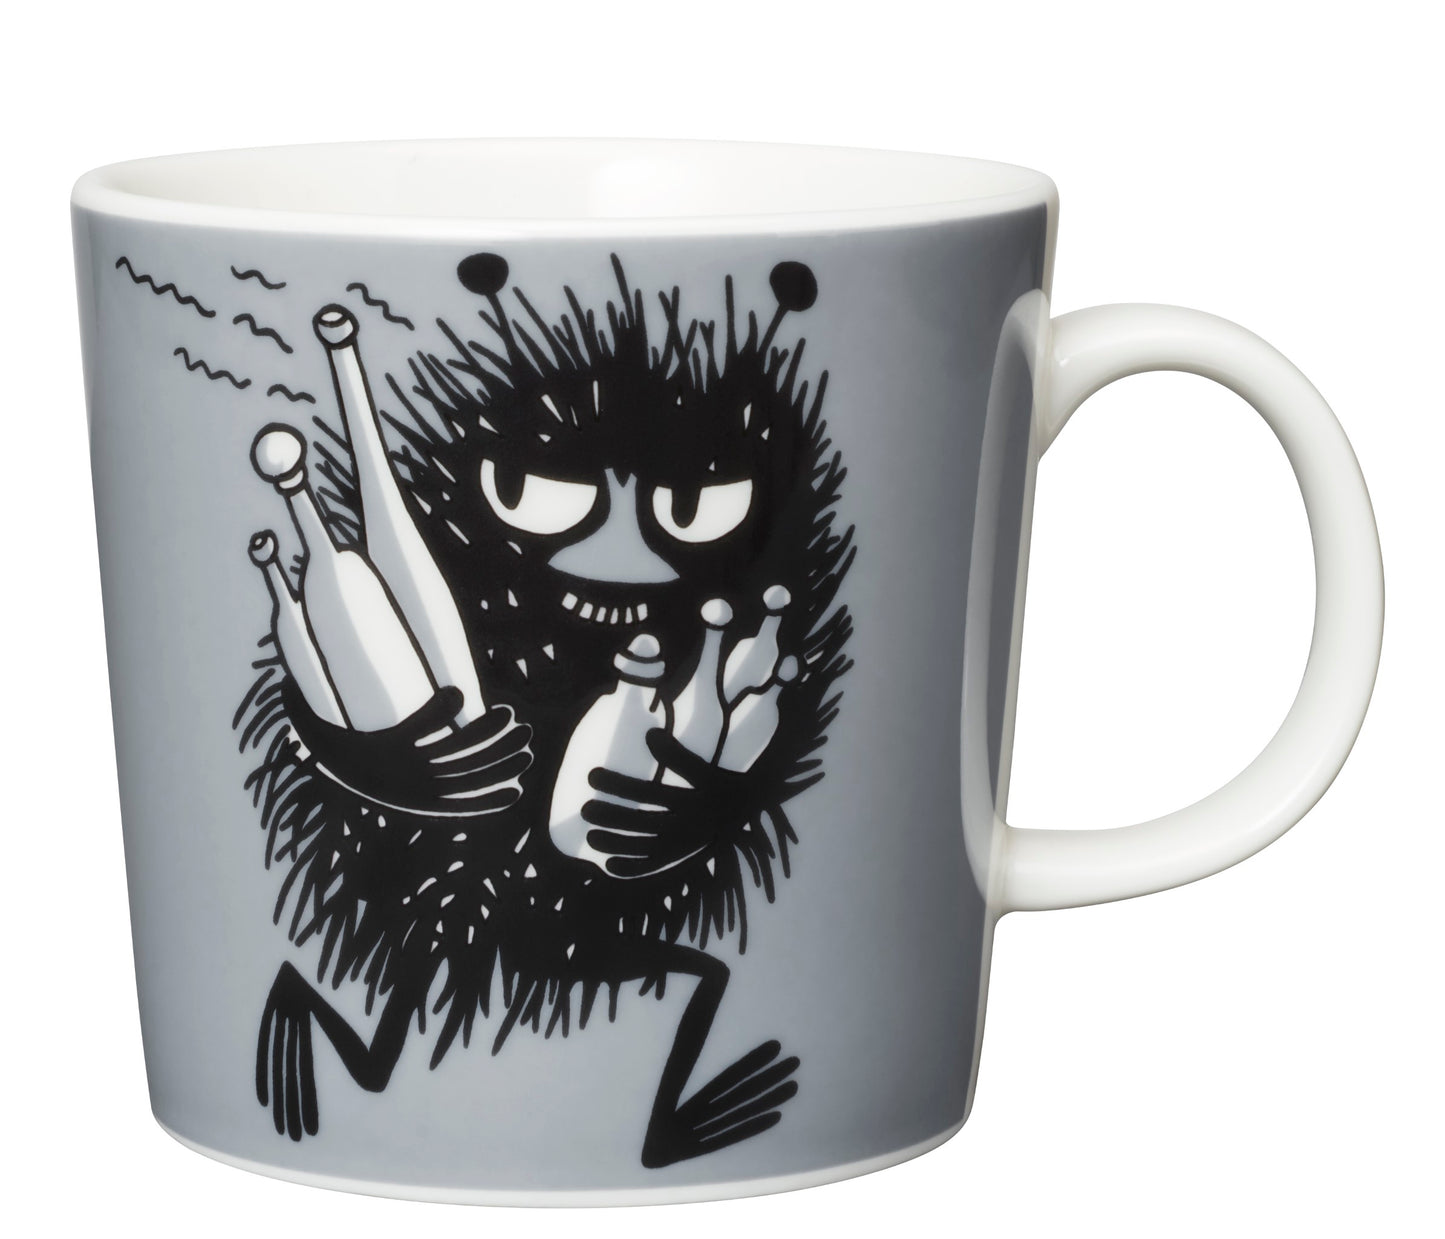 Moomin Mug - Stinky